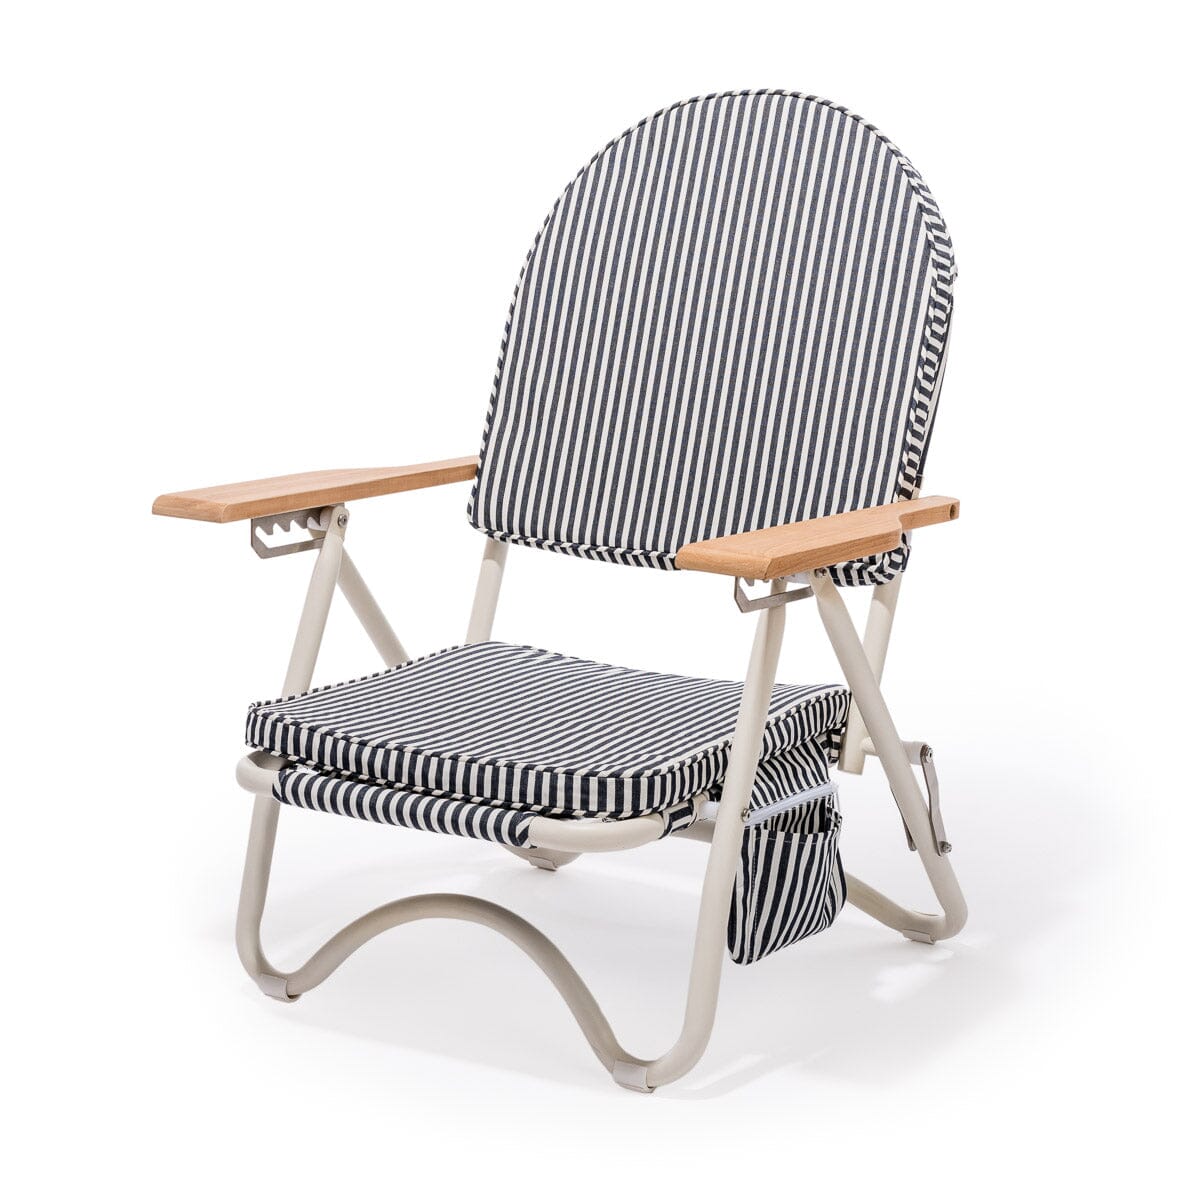 The Pam Chair - Laurens Navy Stripe Pam Chair Business & Pleasure Co Aus 